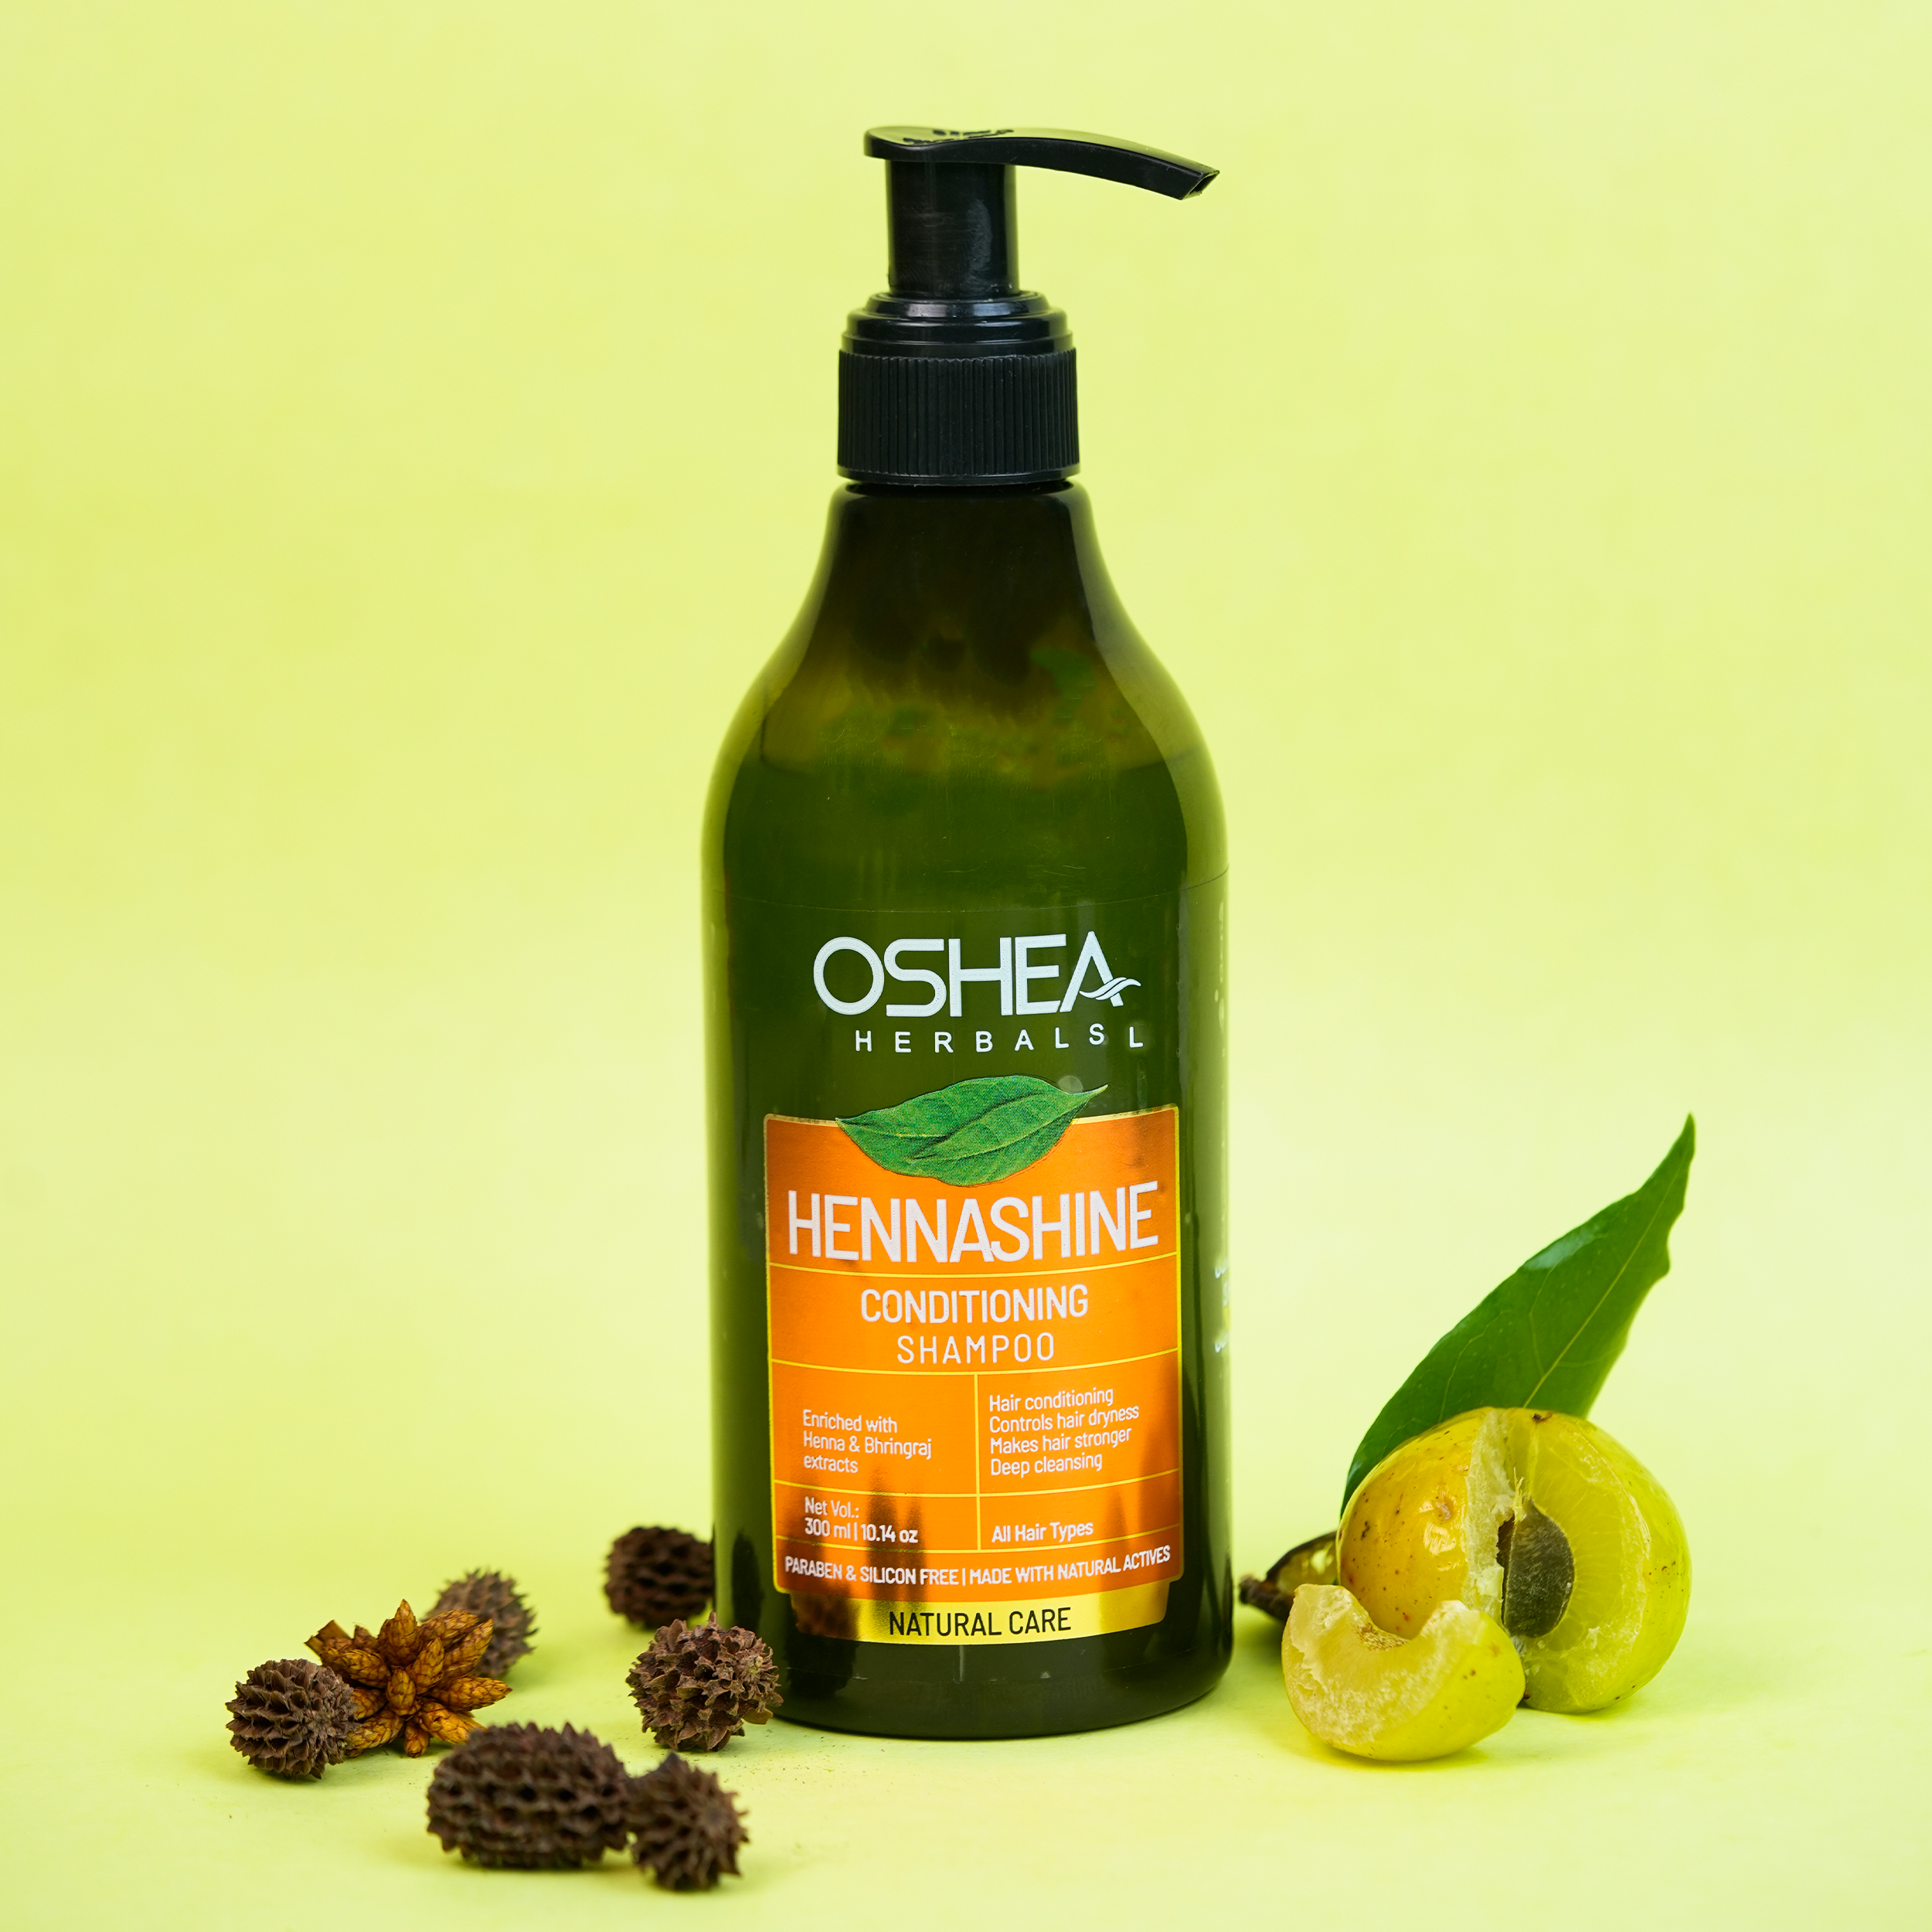  Heenashine Conditioner Shampoo Oshea Herbals